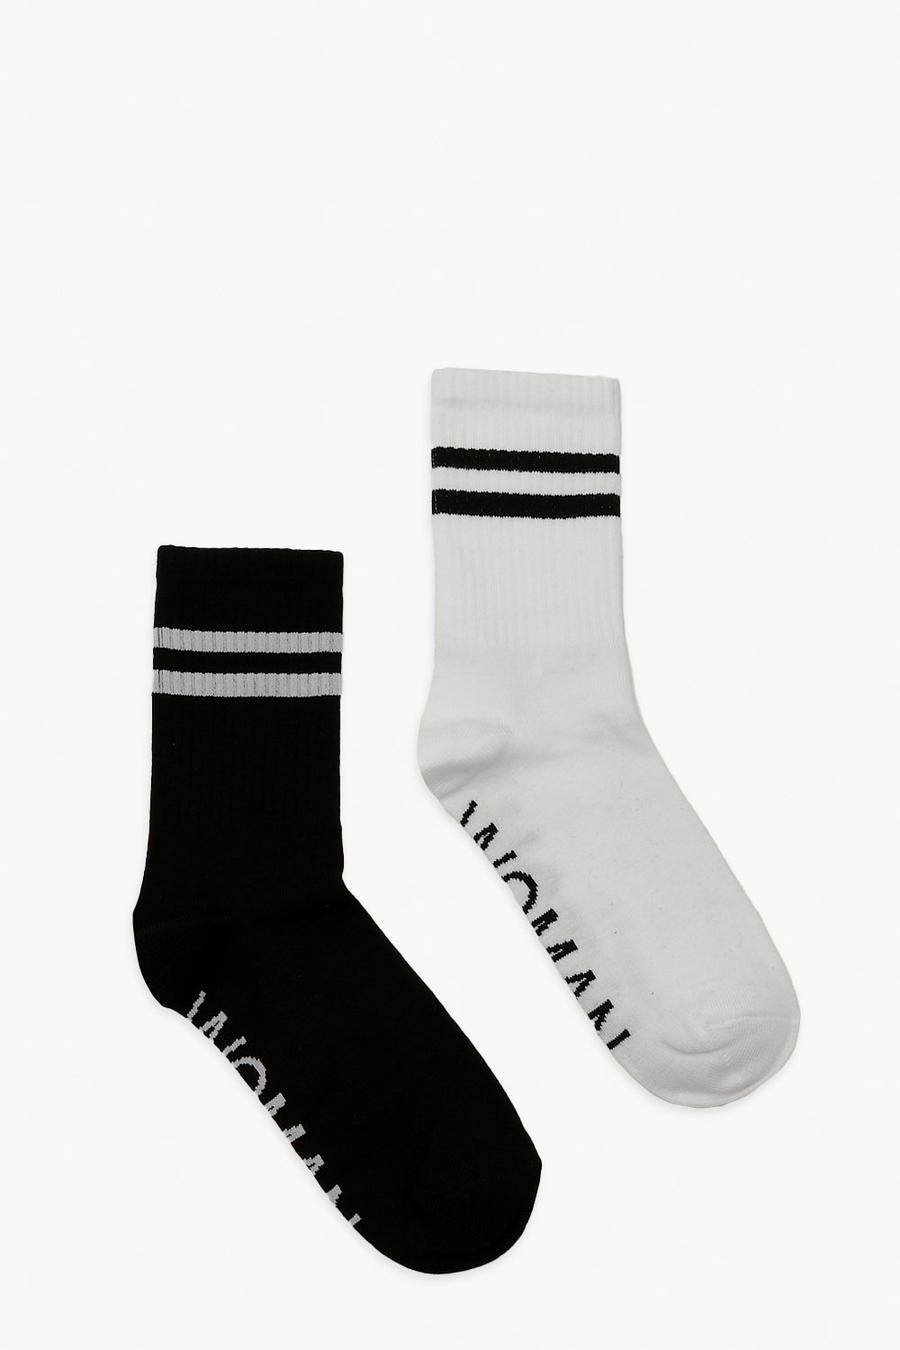 Blackwhite Recycled Woman Sports Socks 2 Pack